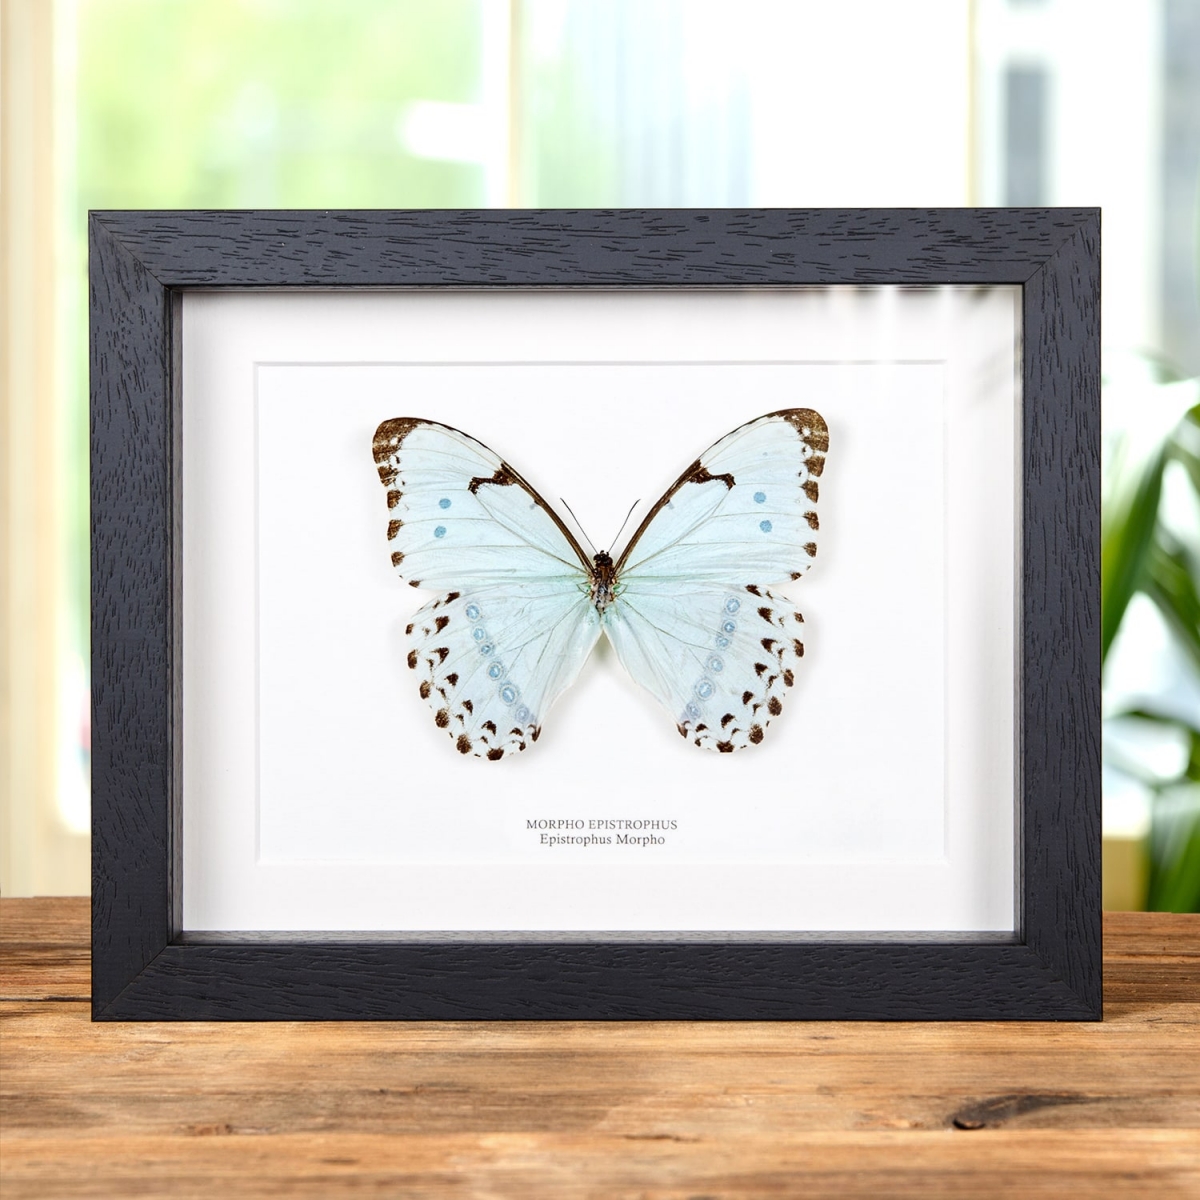 Minibeast Epistrophus Morpho Butterfly In Box Frame (Morpho epistrophus)